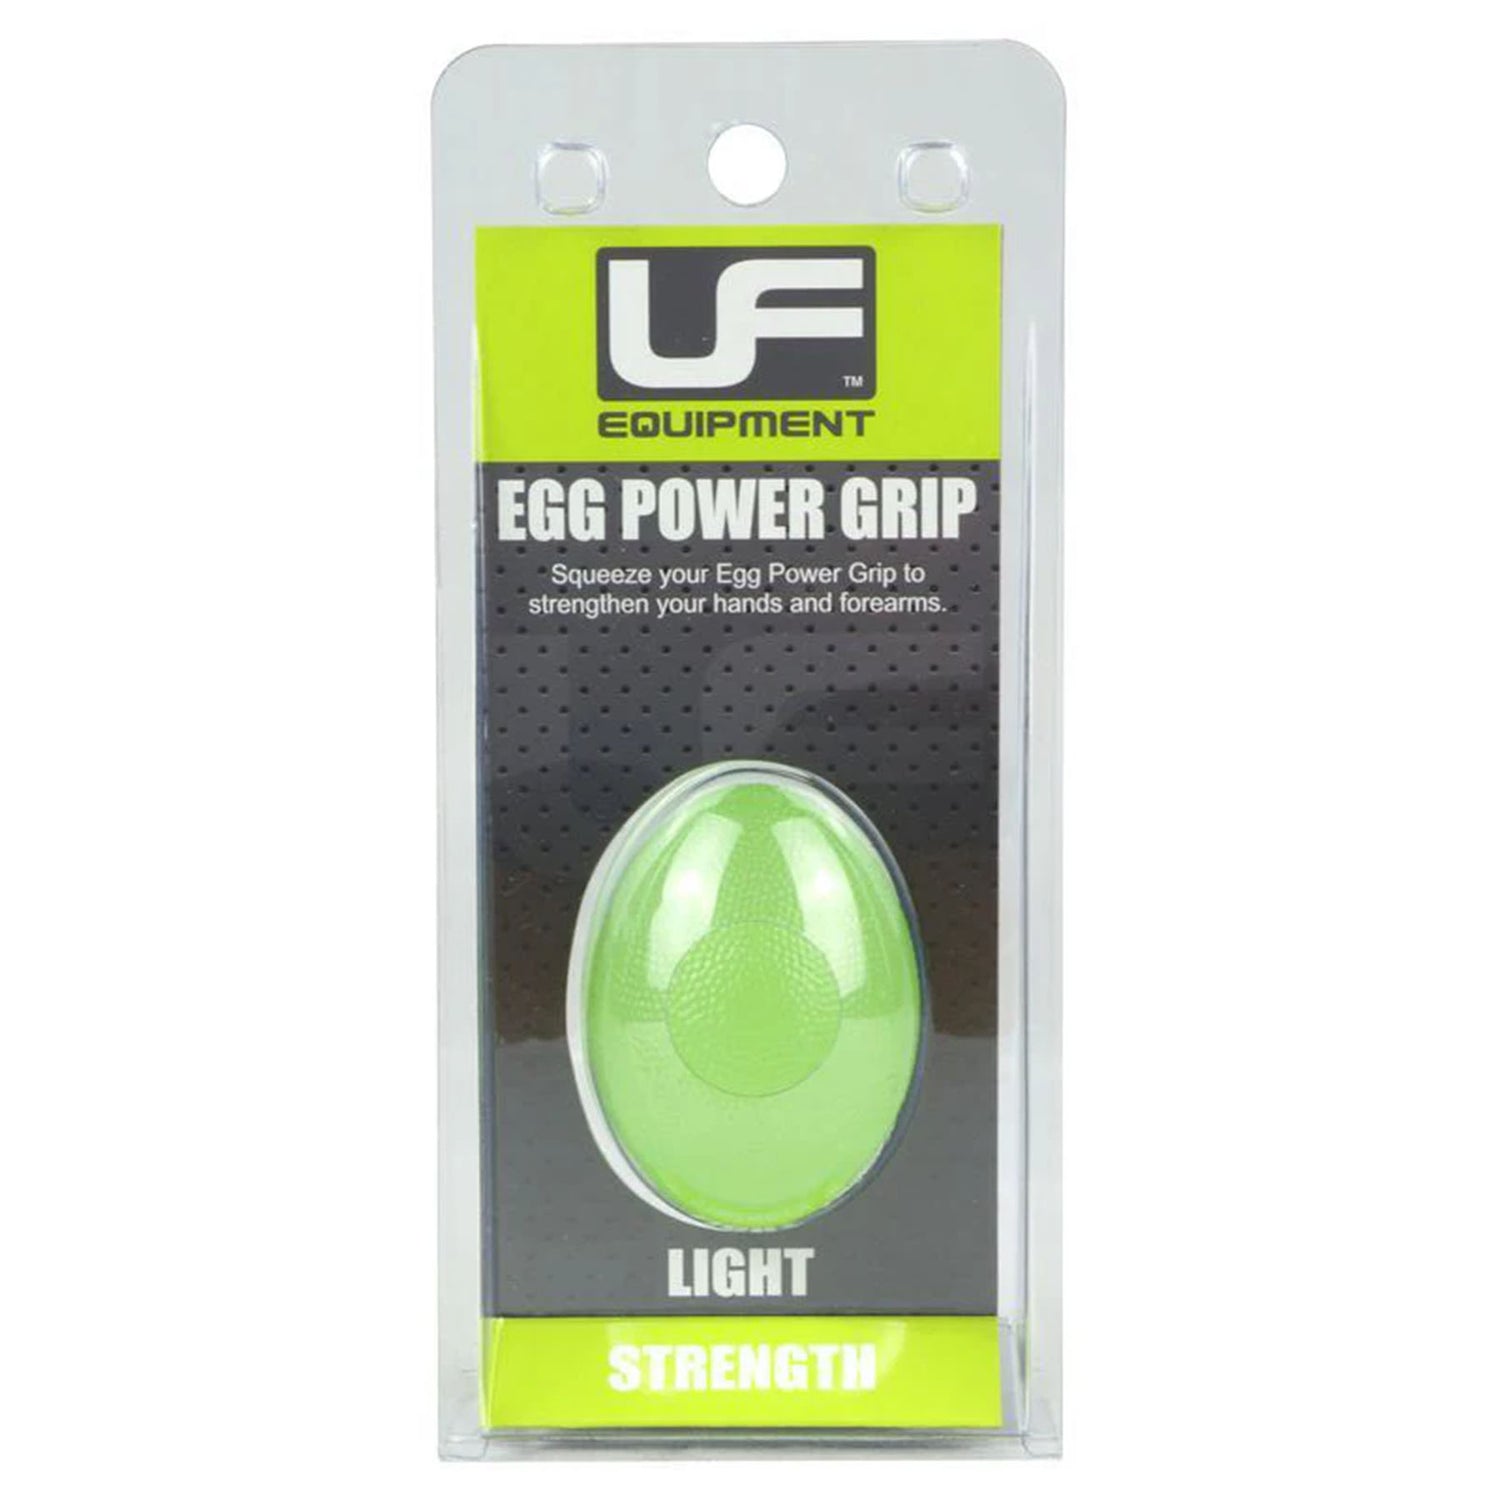 Egg Power Grip